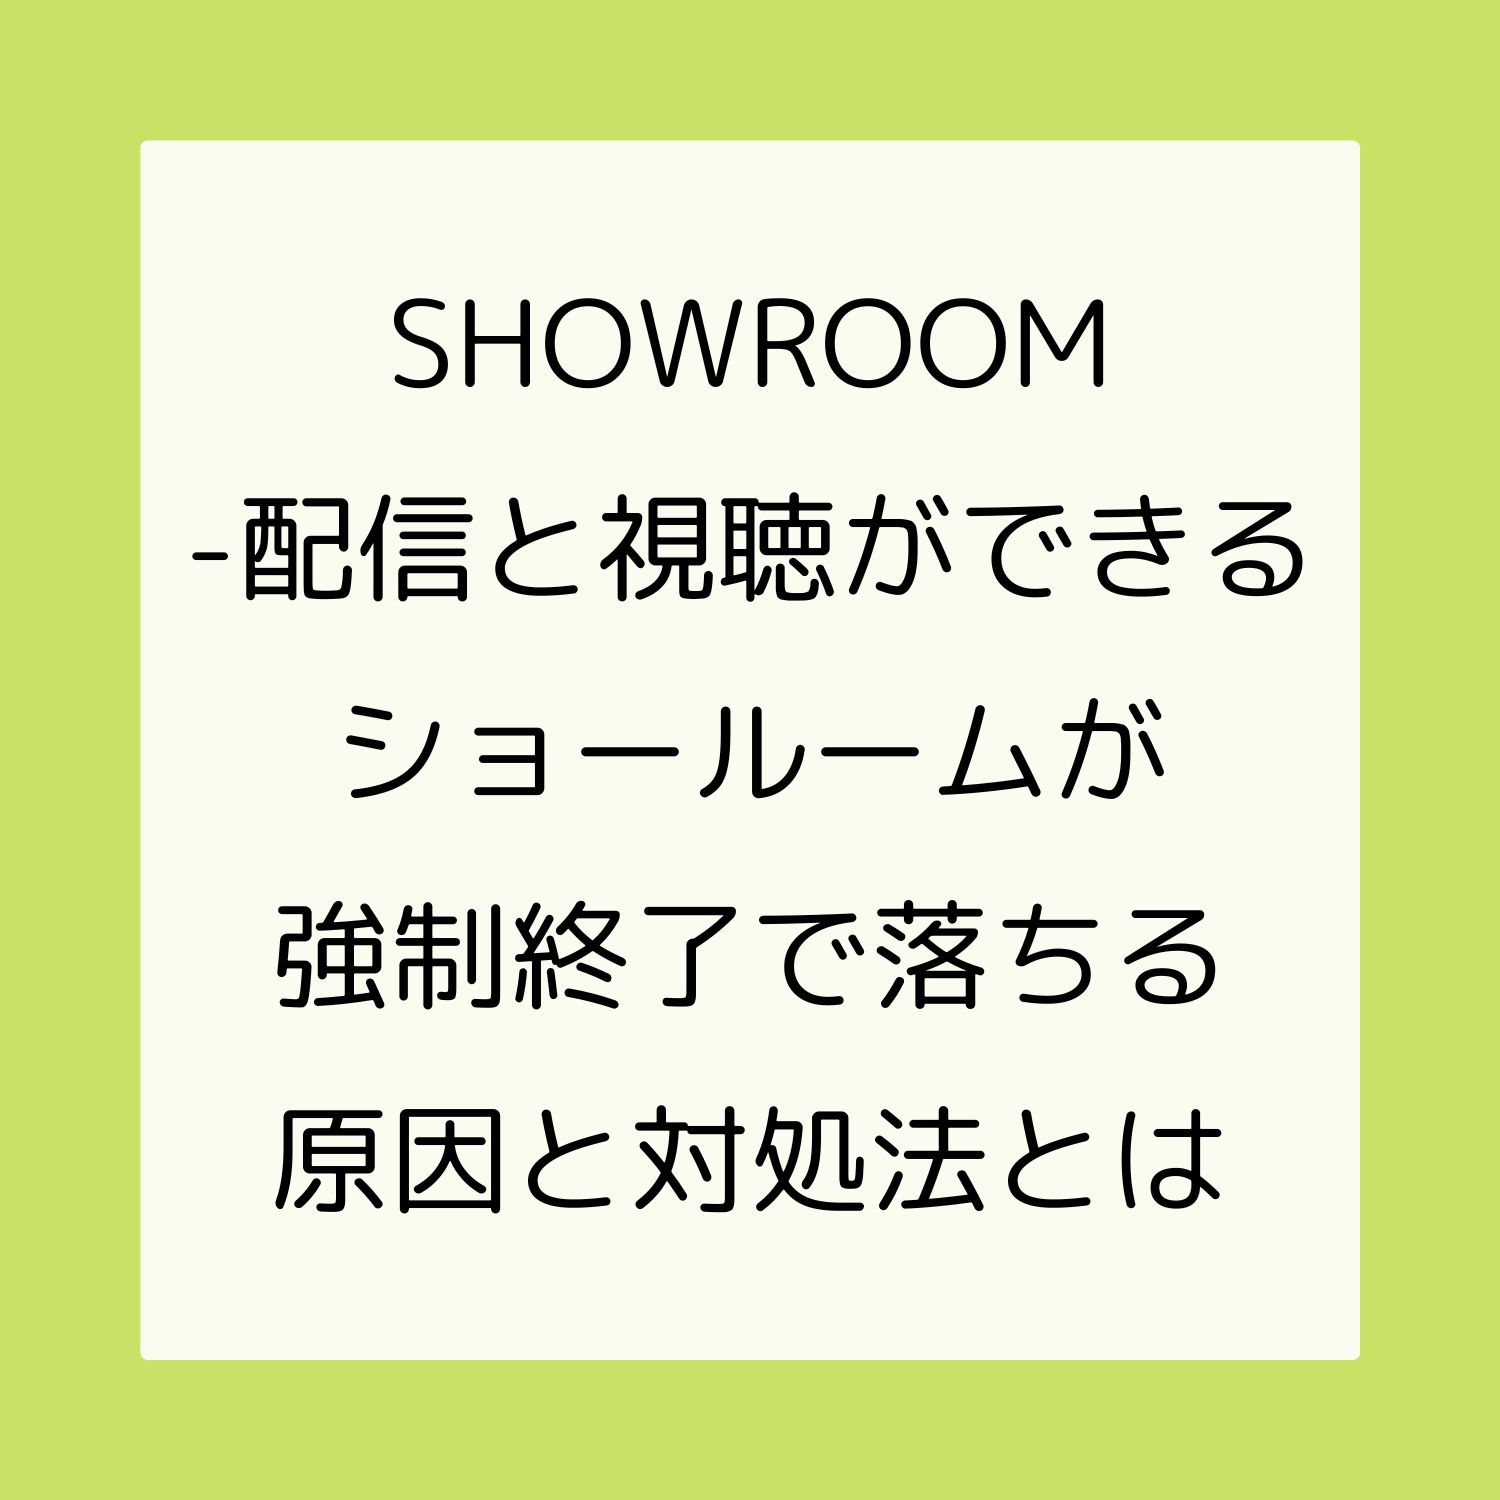 SHOWROOM - 配信と視聴ができるショールームが強制終了で落ちる原因と対処法とは #SHOWROOM - 配信と視聴ができるショールーム